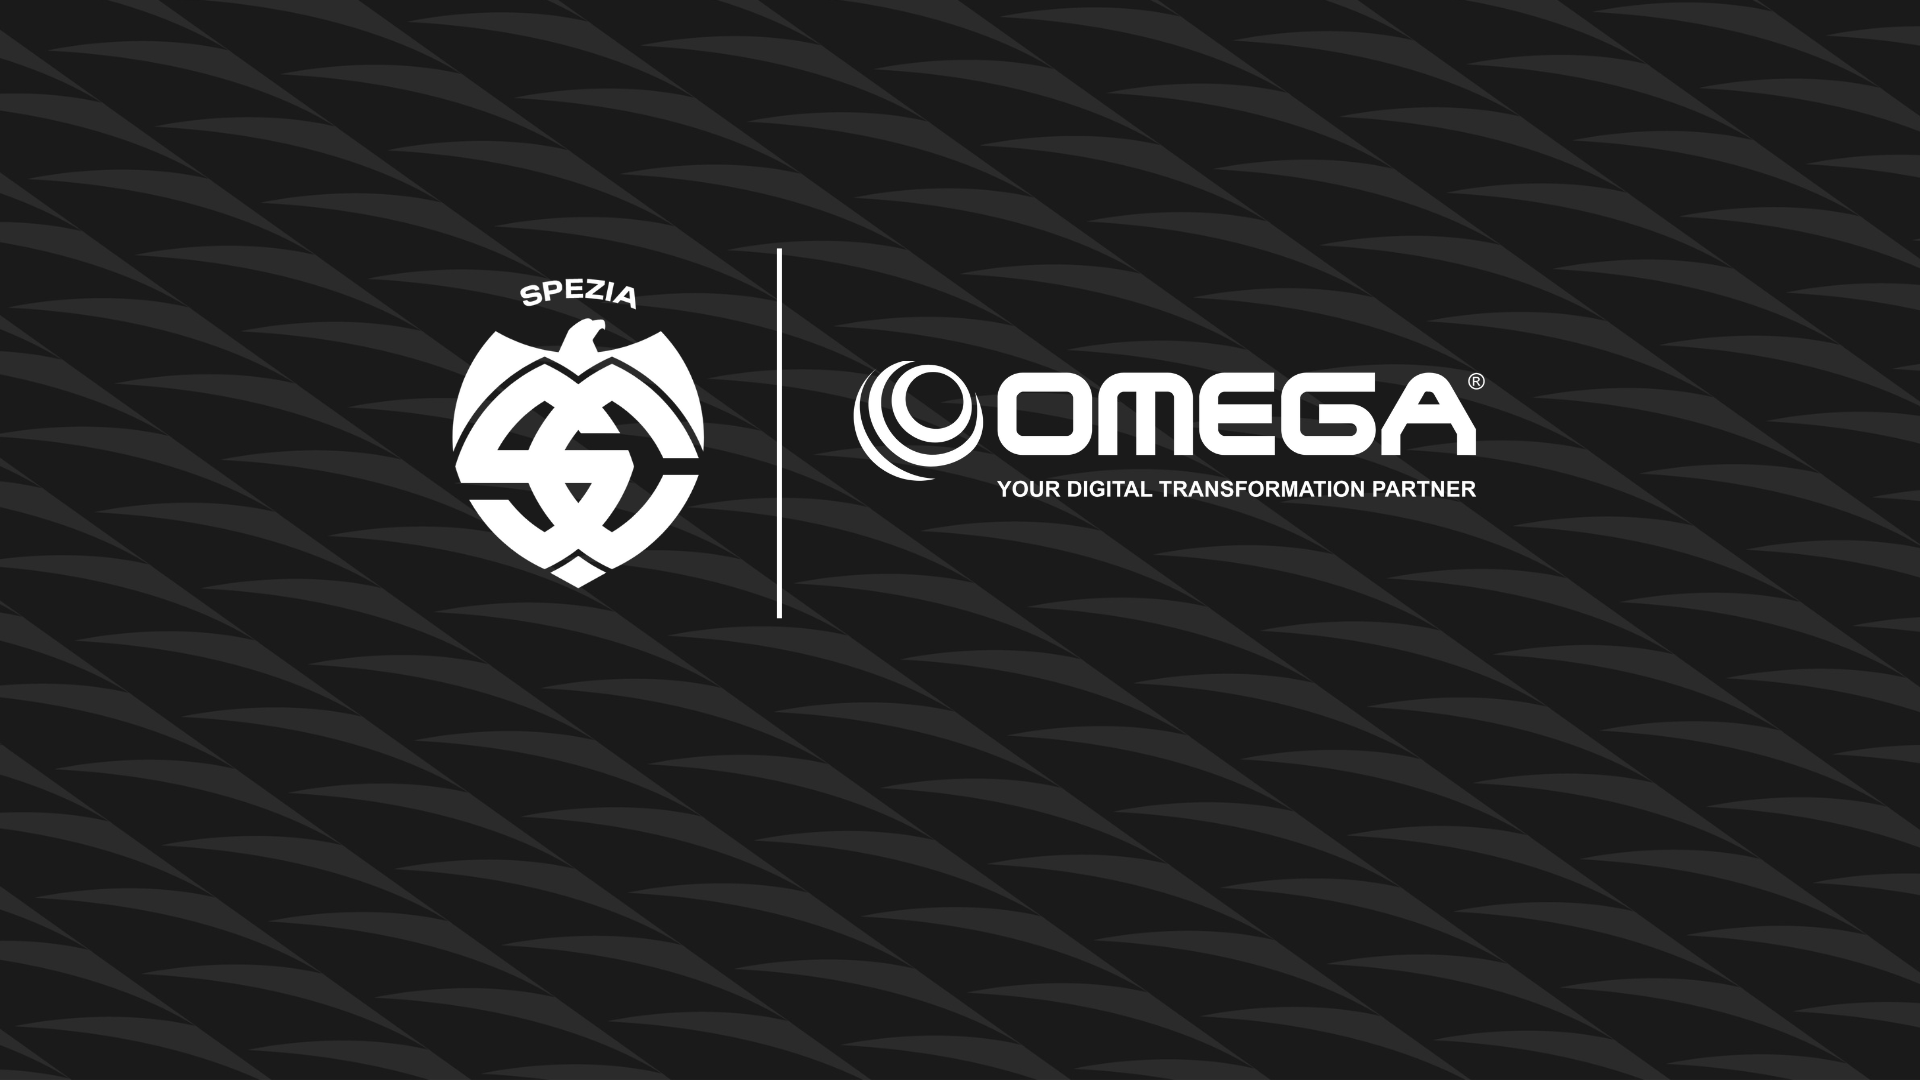 Omega is new Top Sponsor of Spezia Calcio